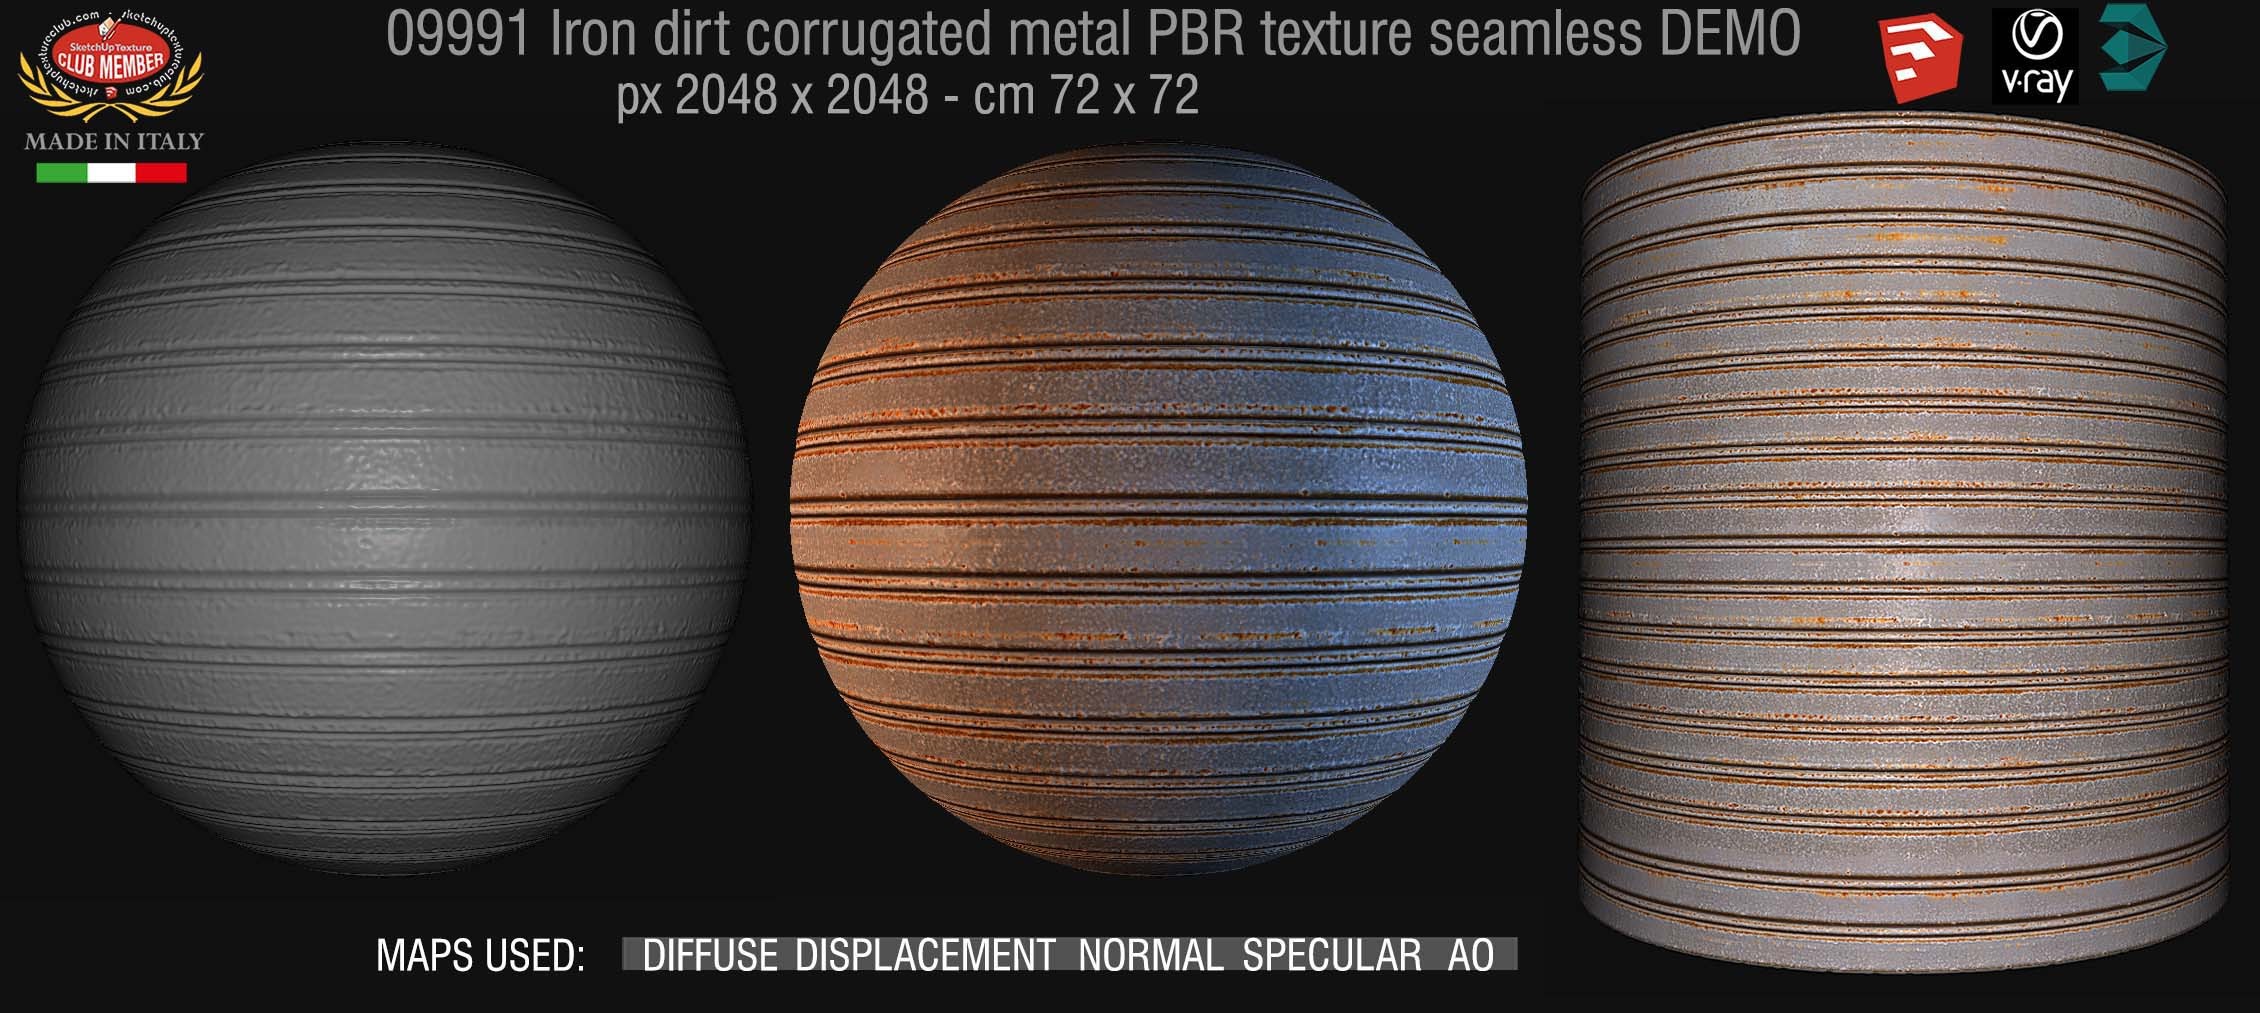 09991 Iron corrugated dirt rusty metal PBR texture seamless